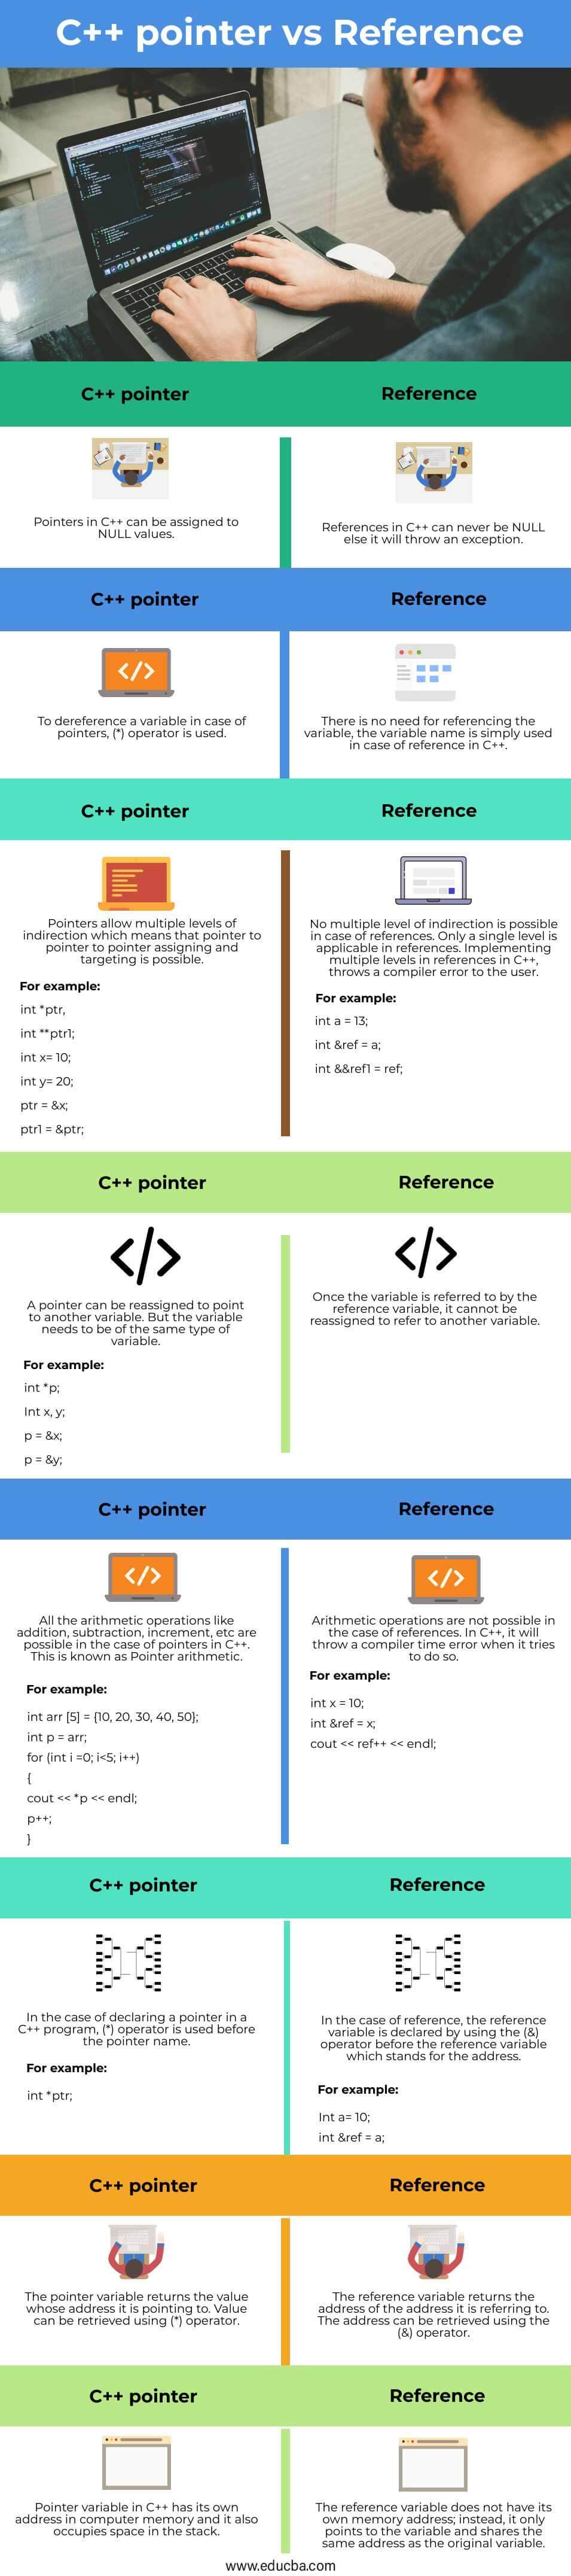 C++-pointer-vs-Reference-info